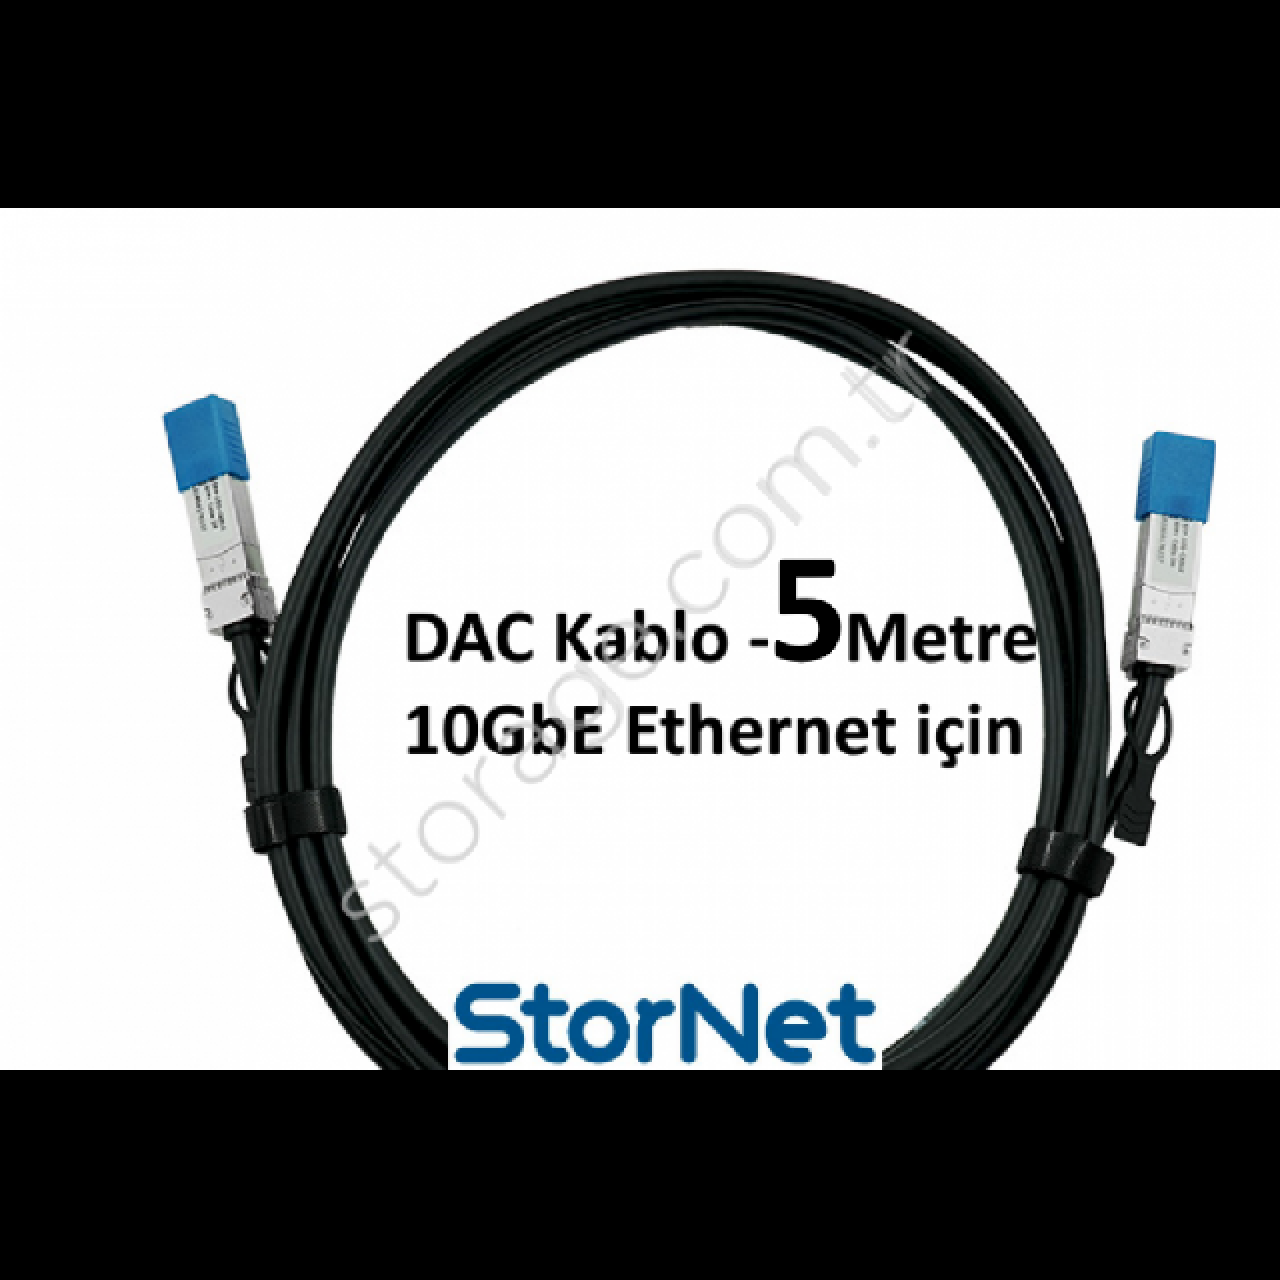 5 METRE DAC KABLO 10GbE for Cisco/intel